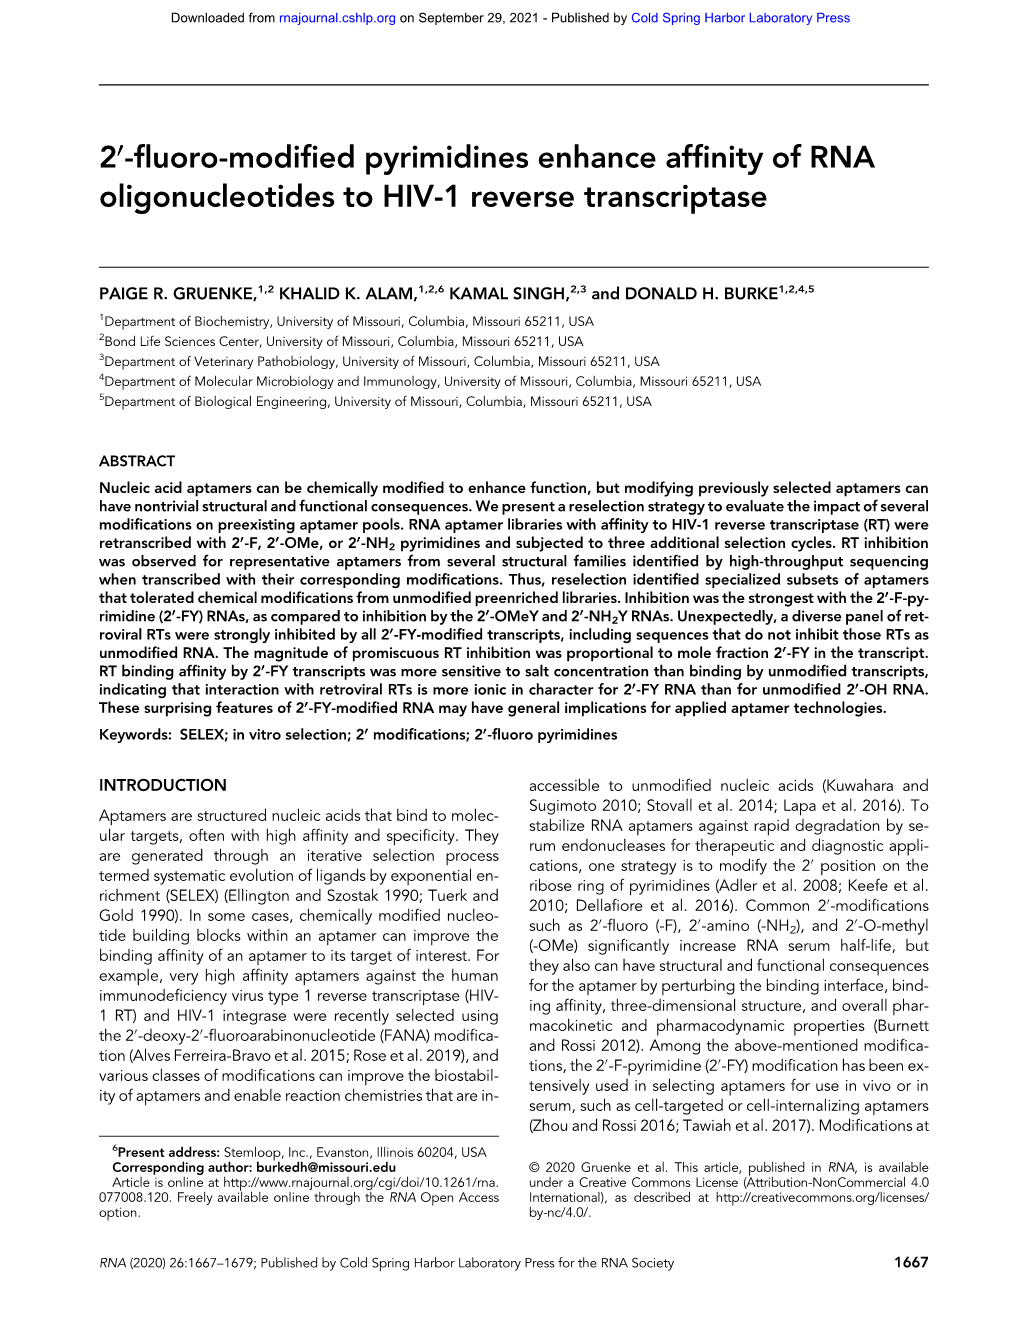 2′-Fluoro-Modified Pyrimidines Enhance Affinity of RNA Oligonucleotides to HIV-1 Reverse Transcriptase